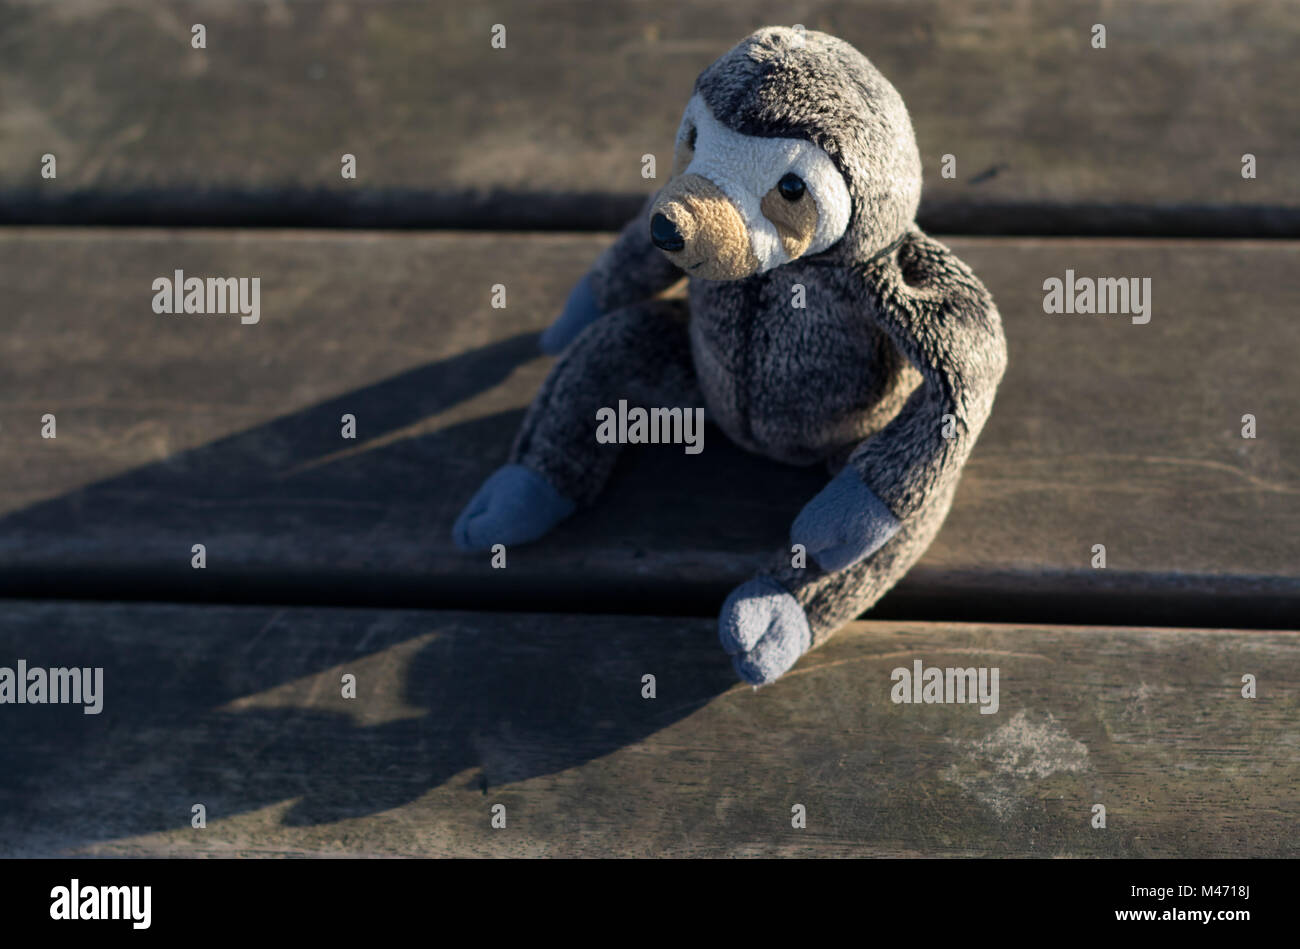 Stuffed Monkey Toy on Bench Stock Photo